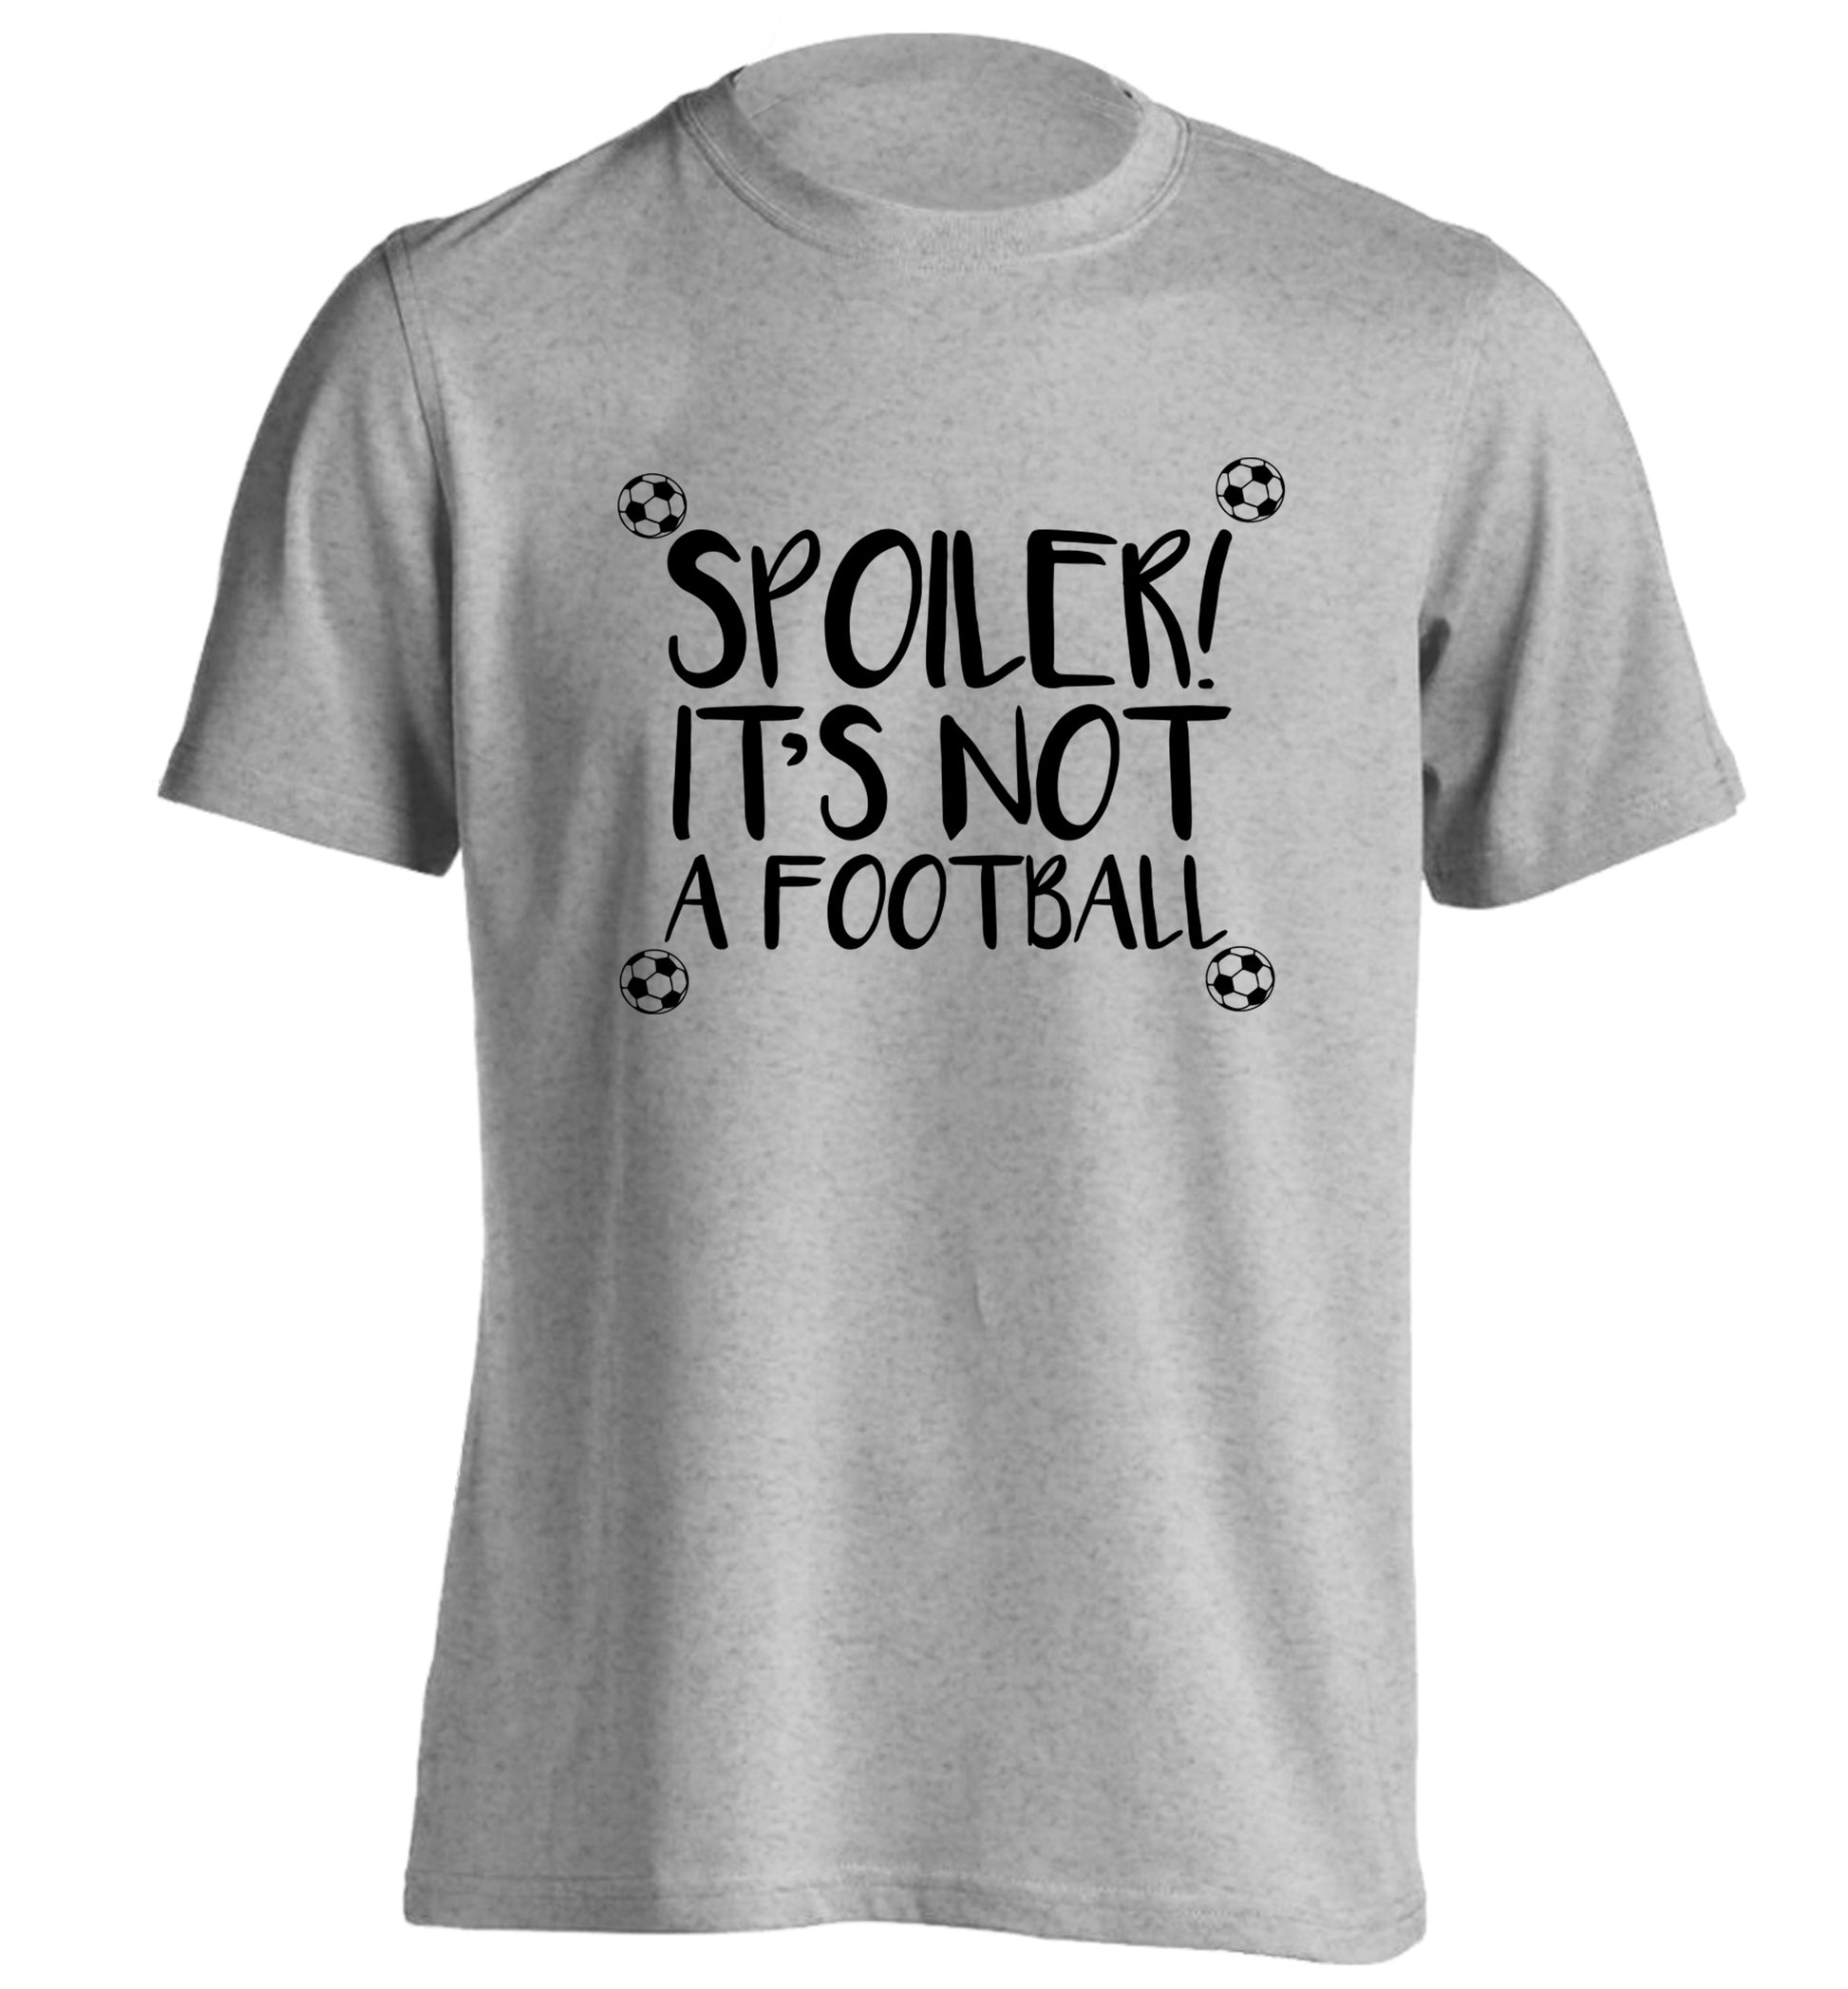 Spoiler it's not a football adults unisex grey Tshirt 2XL